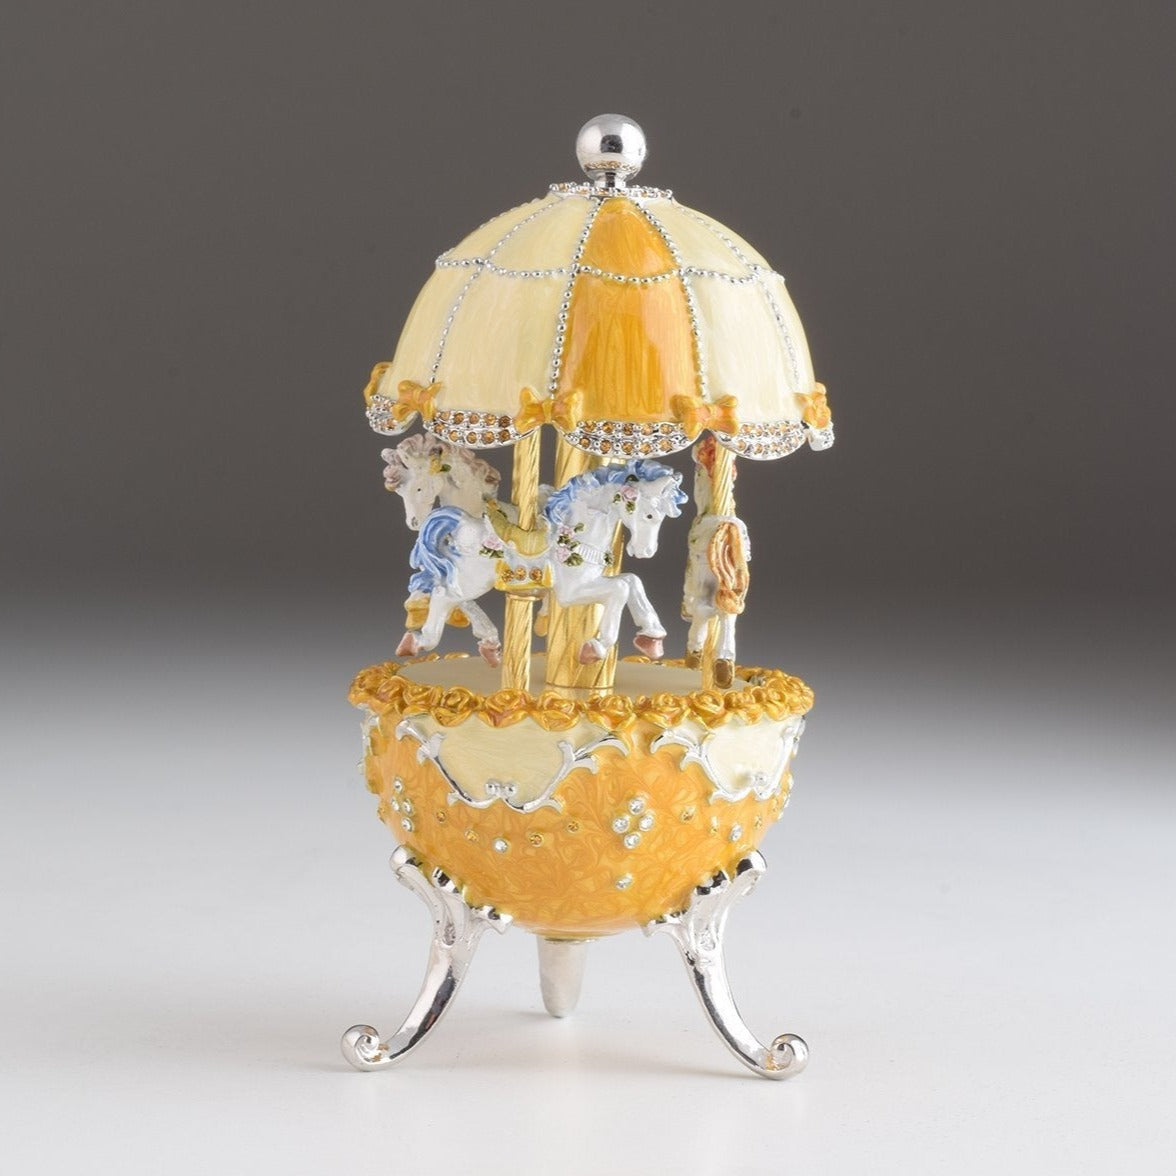 Keren Kopal Yellow Faberge Egg Carousel Wind up Music Box  124.00